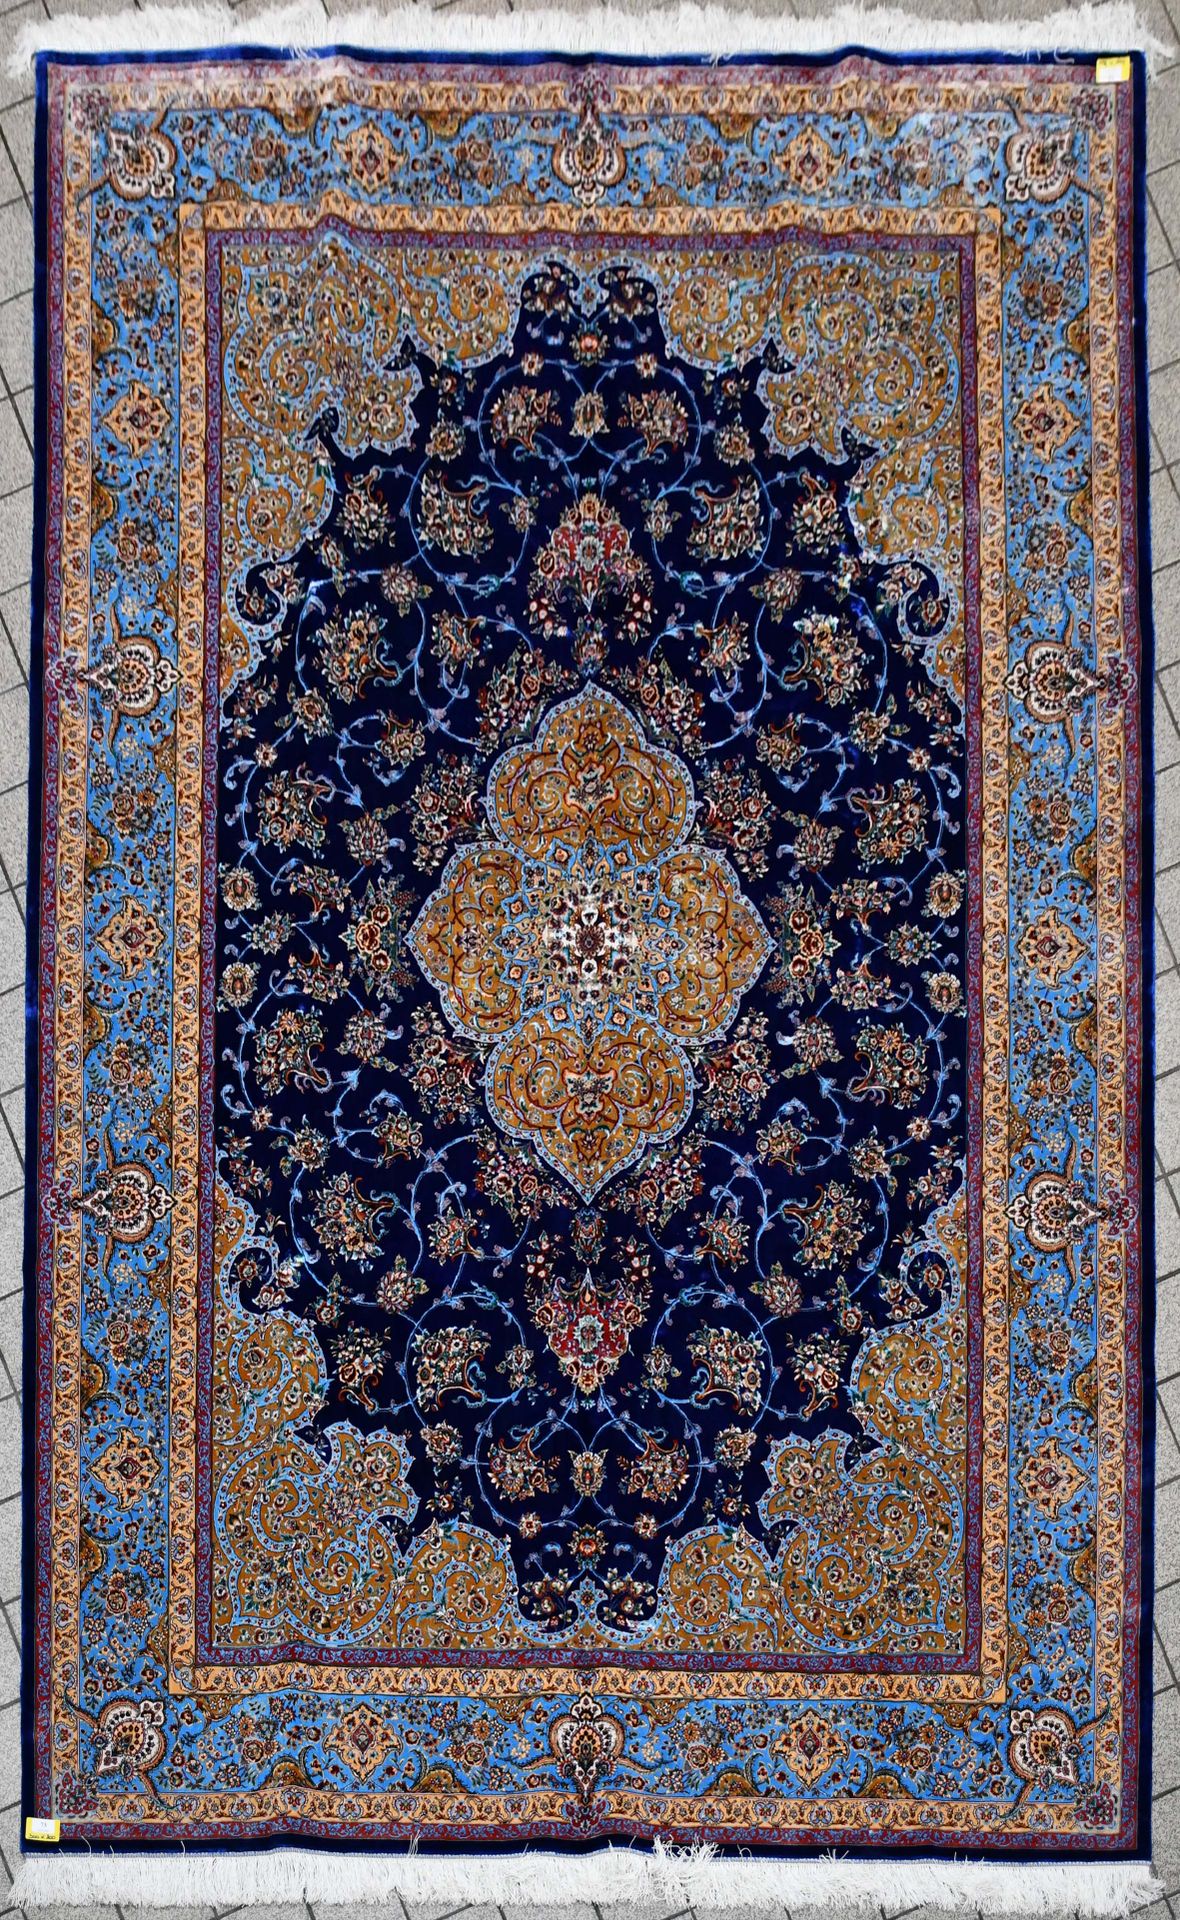 Null 地毯

半机械化的丝毯。

尺寸：300厘米×200厘米。